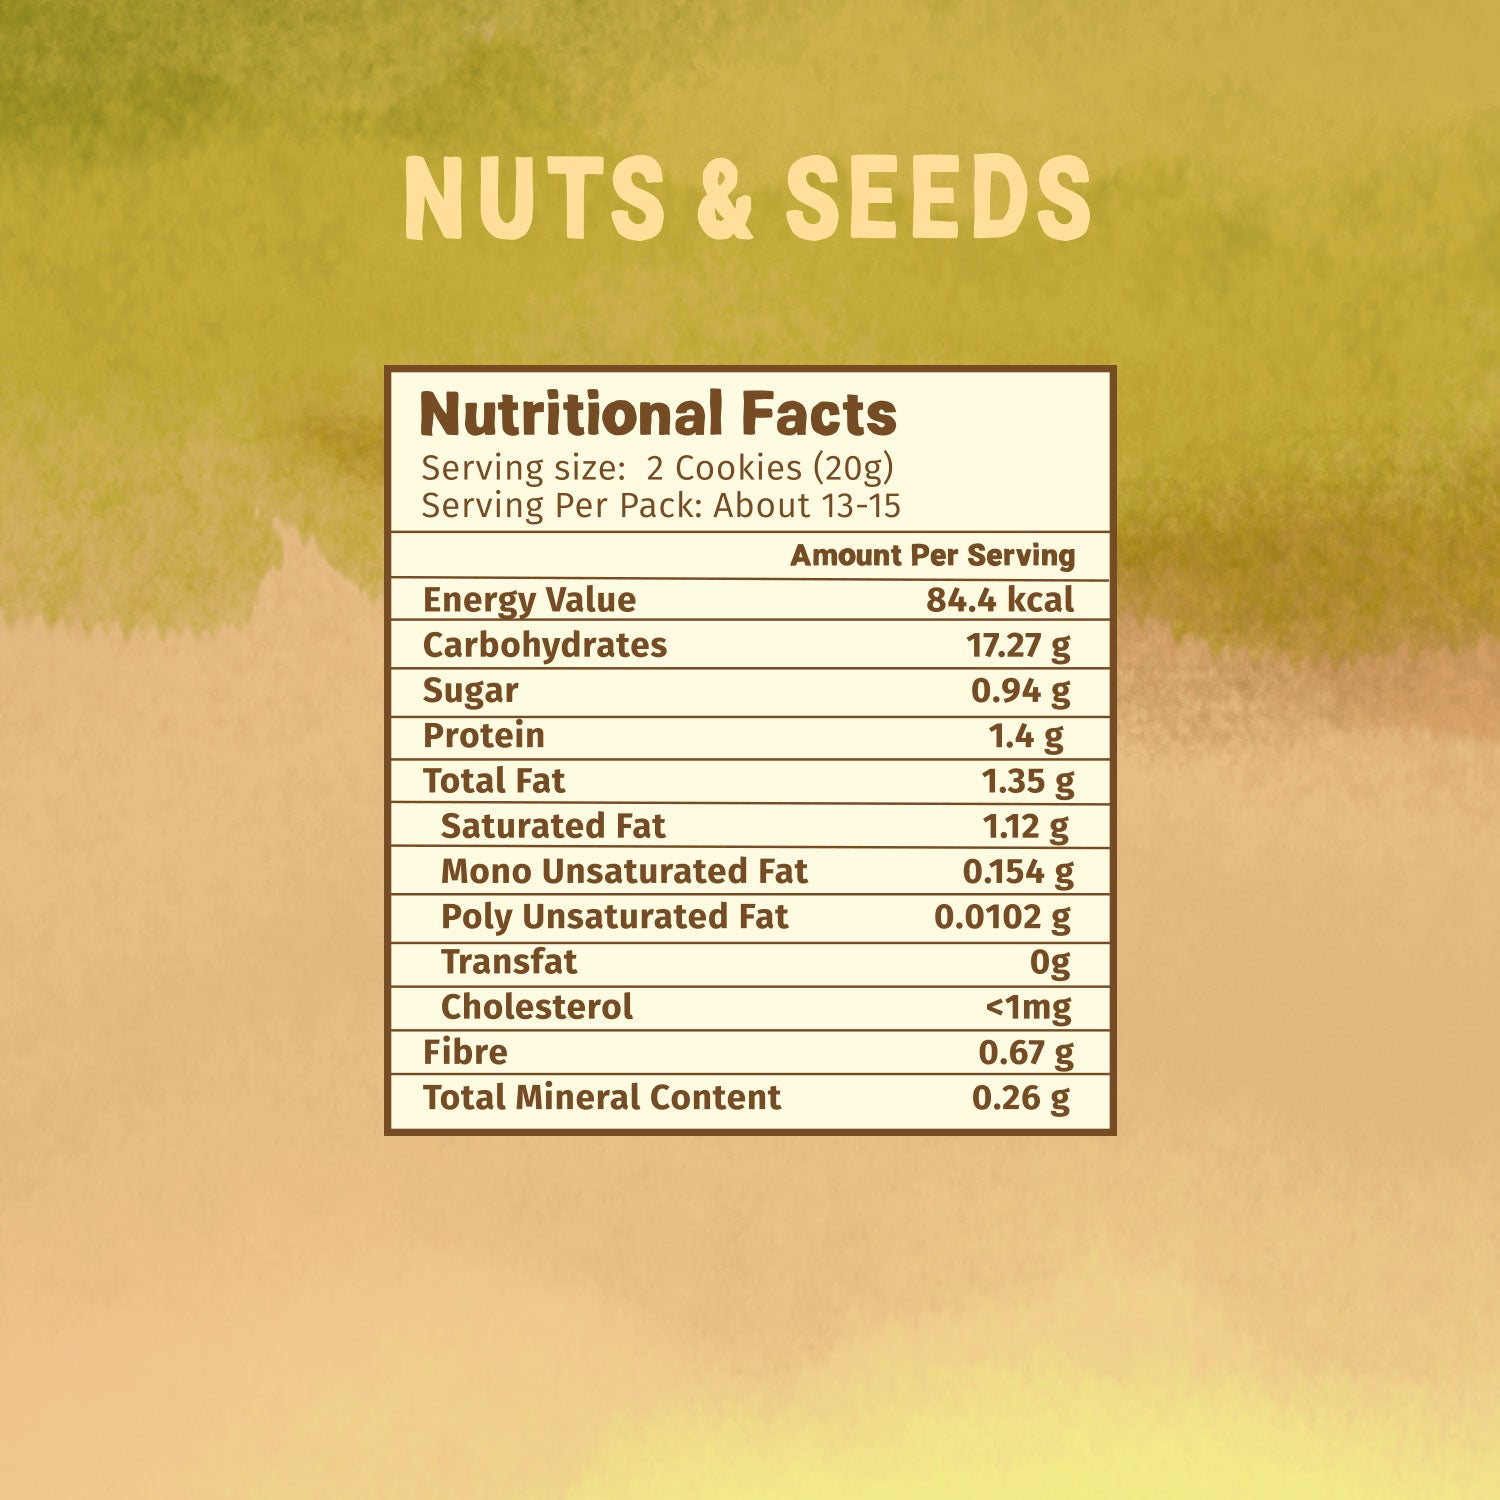 Healthy & Nutritional  Millet & Jaggery Cookies | Nuts & Seeds | Pack of 2